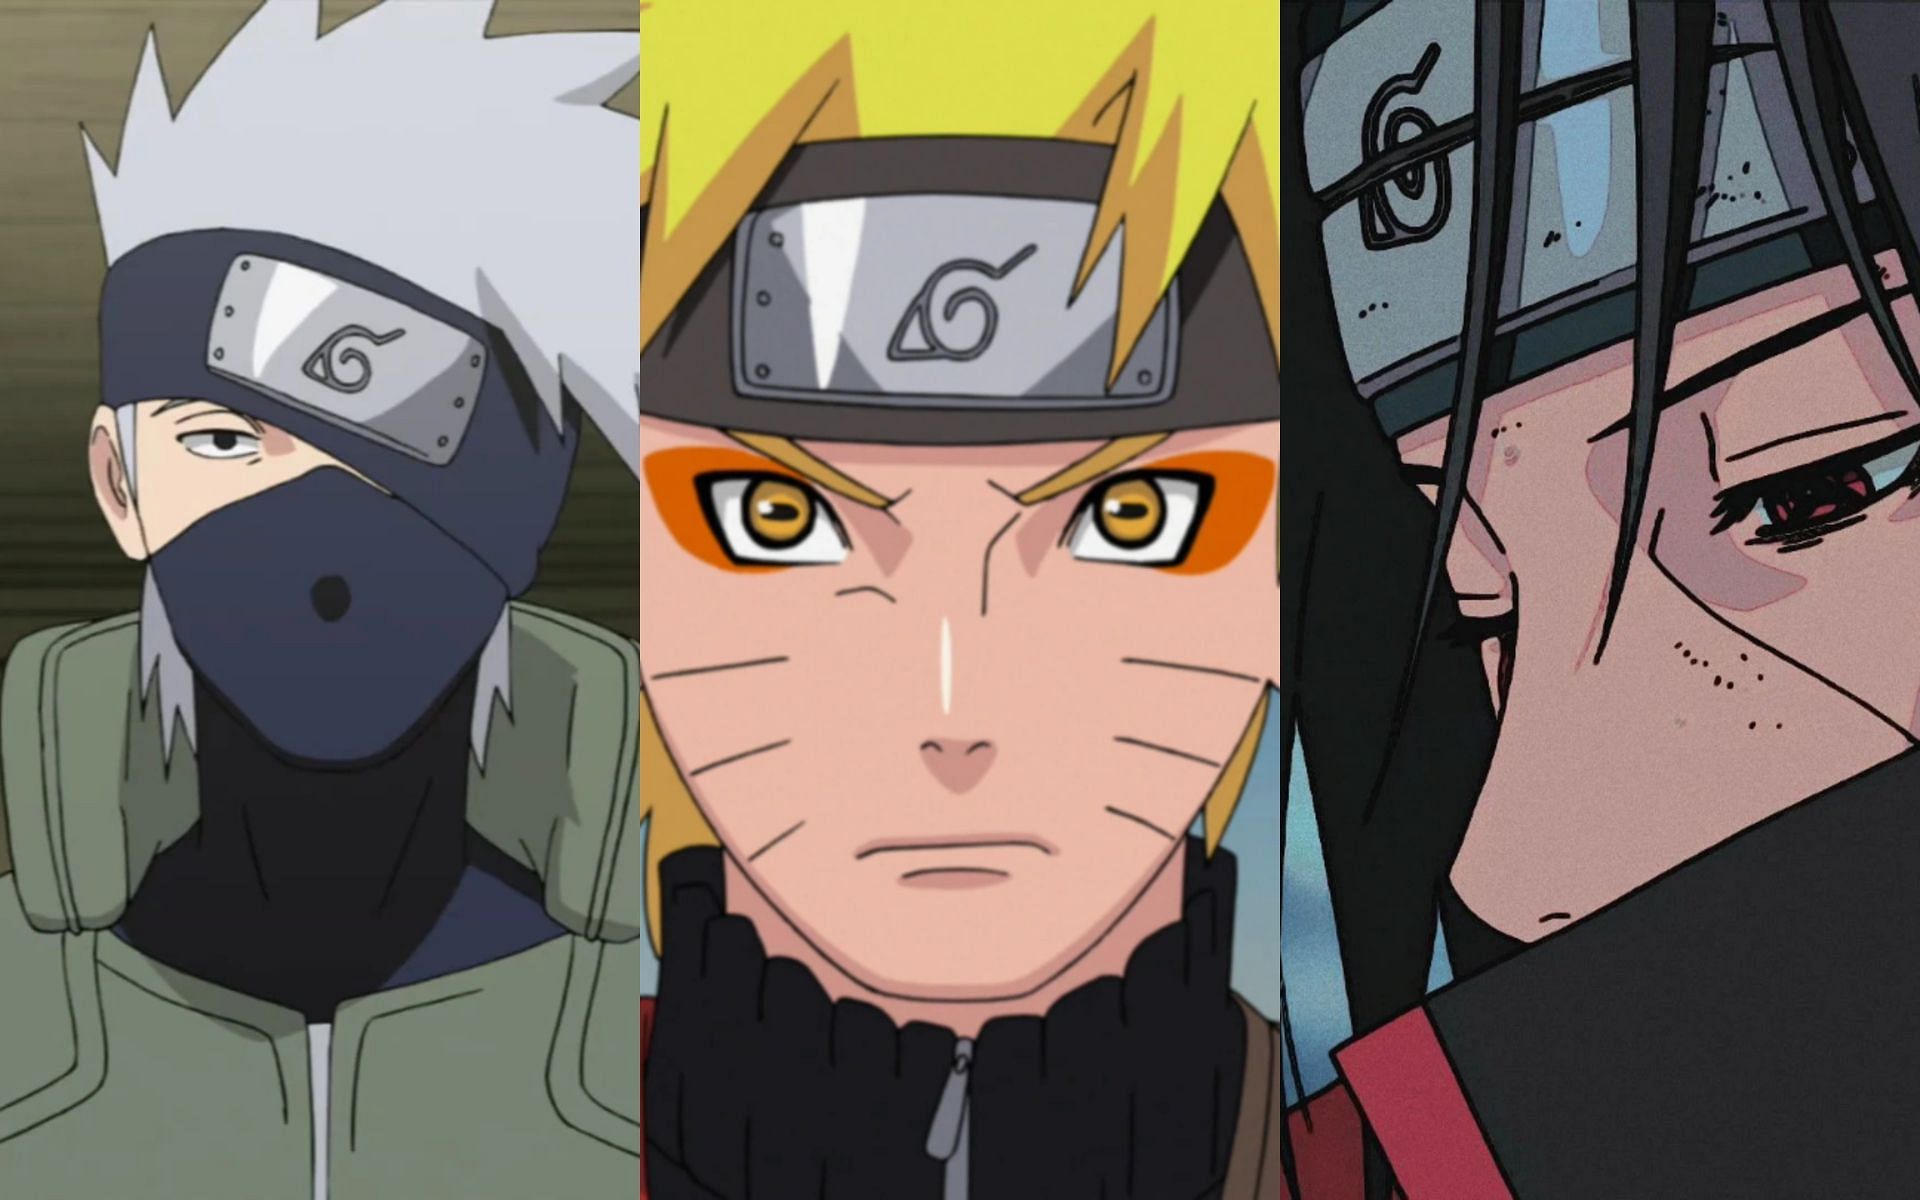 Naruto Bonds With His Original Father Figure in Heartwarming New